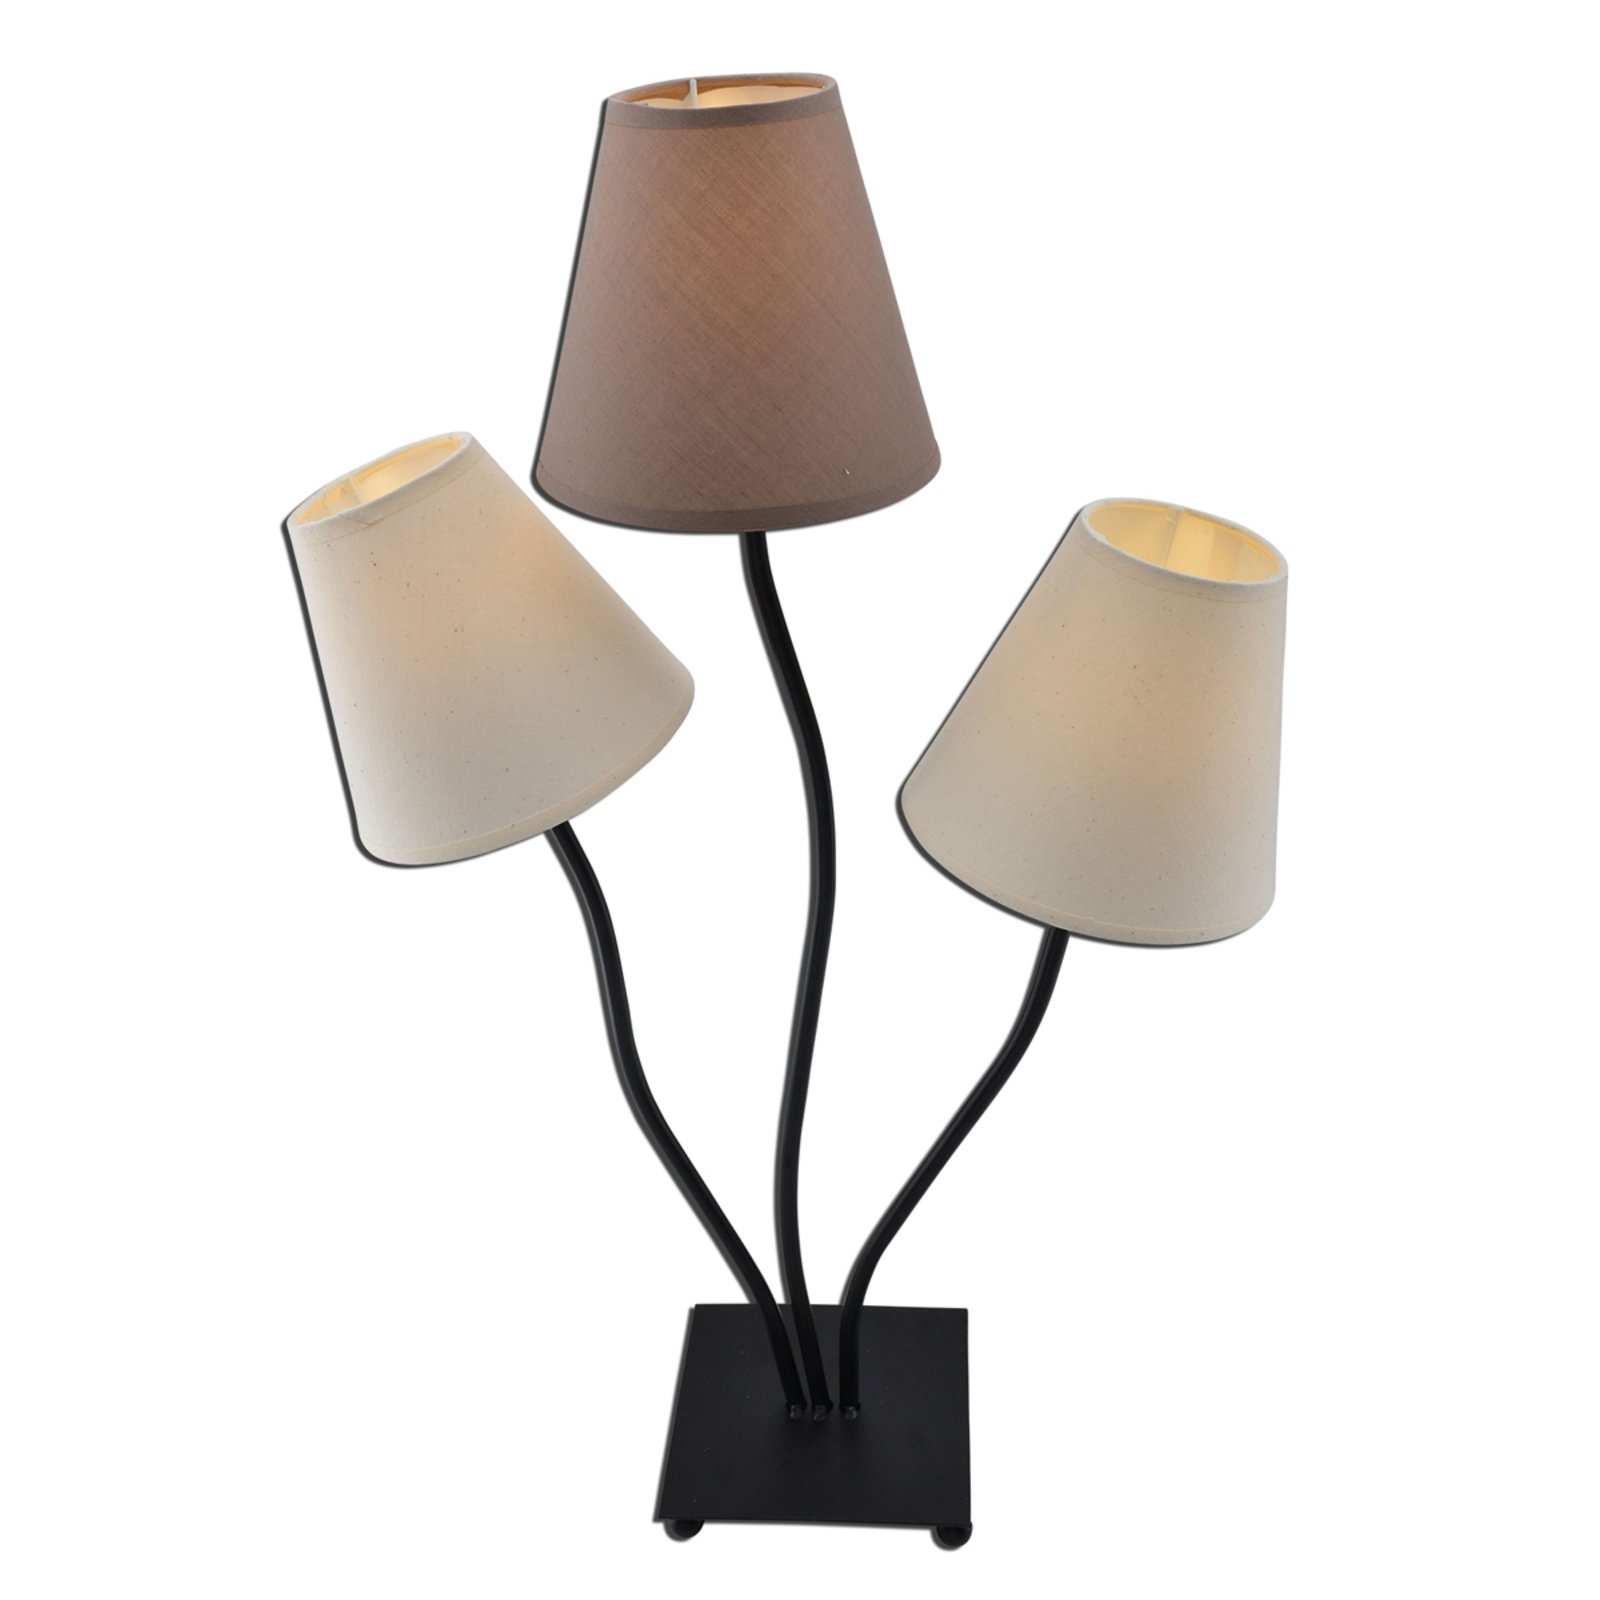 Twiddle - bordslampa, tre lampor i bruna nyanser